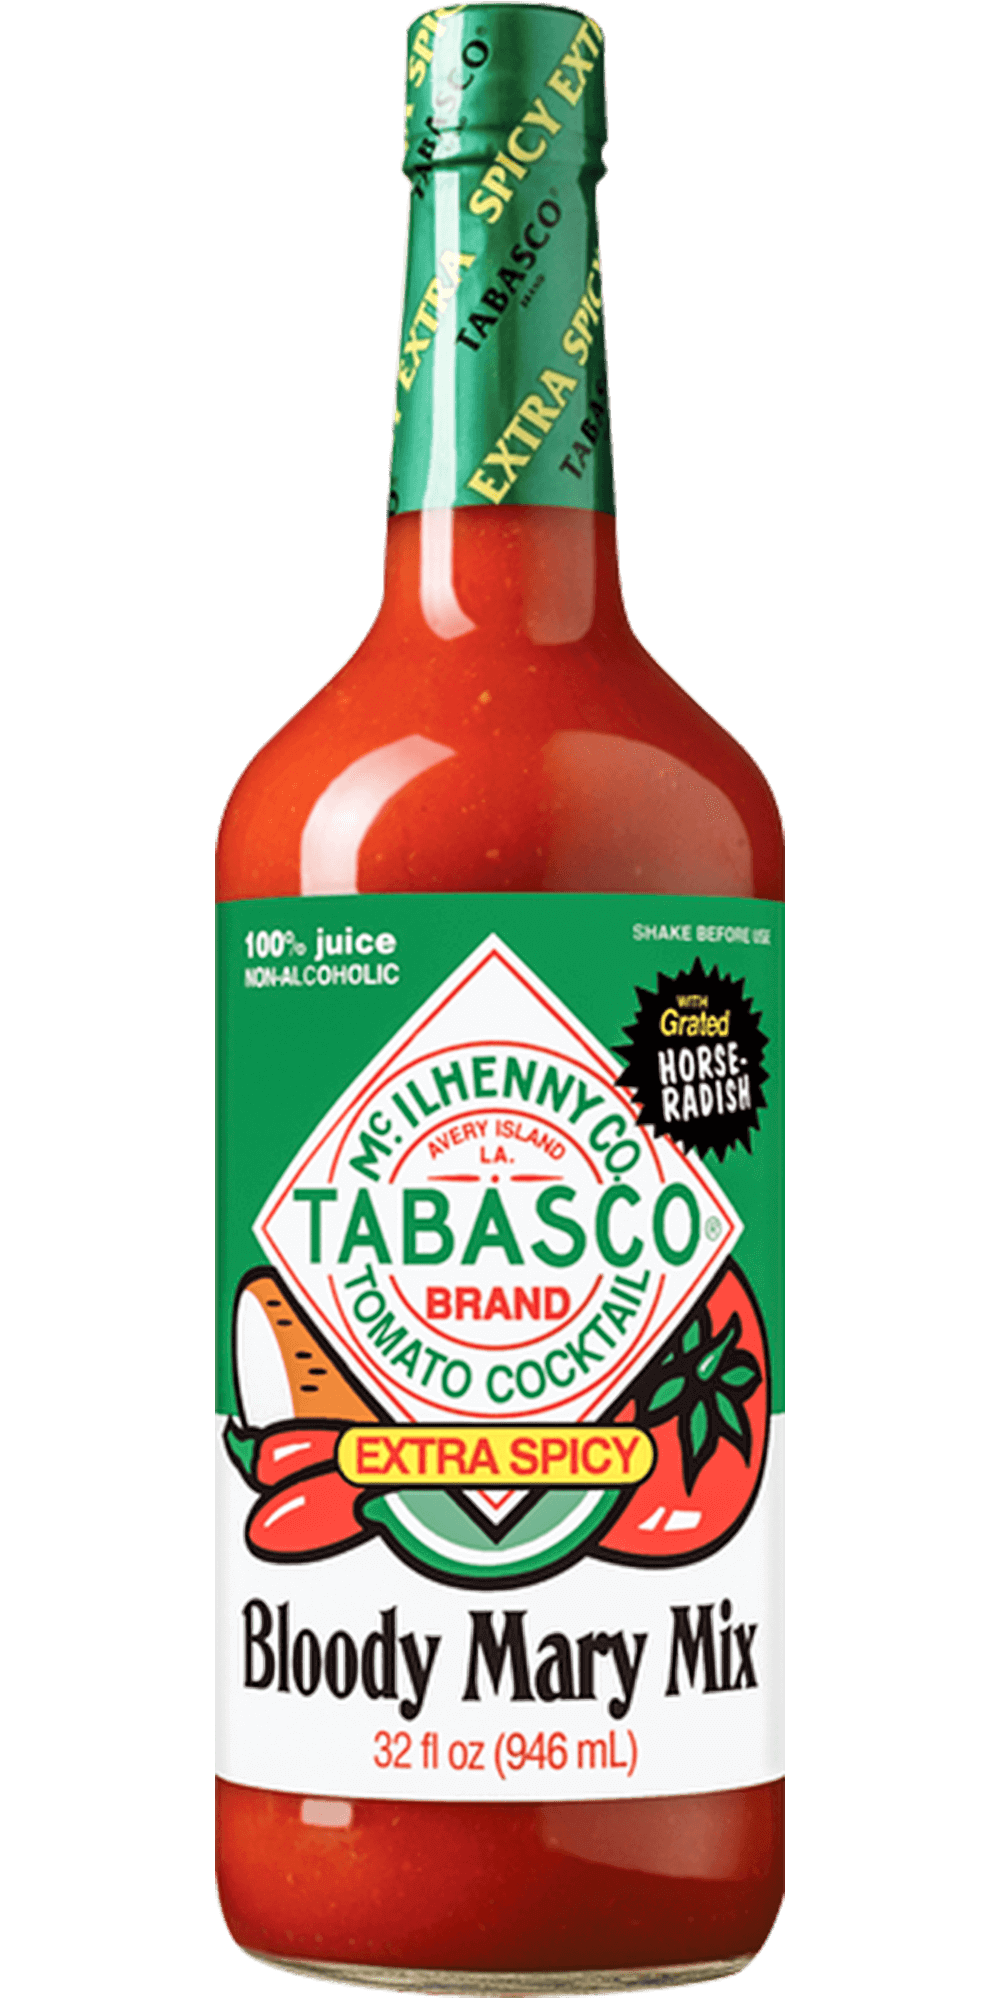 Tabasco-Chili-Sauce